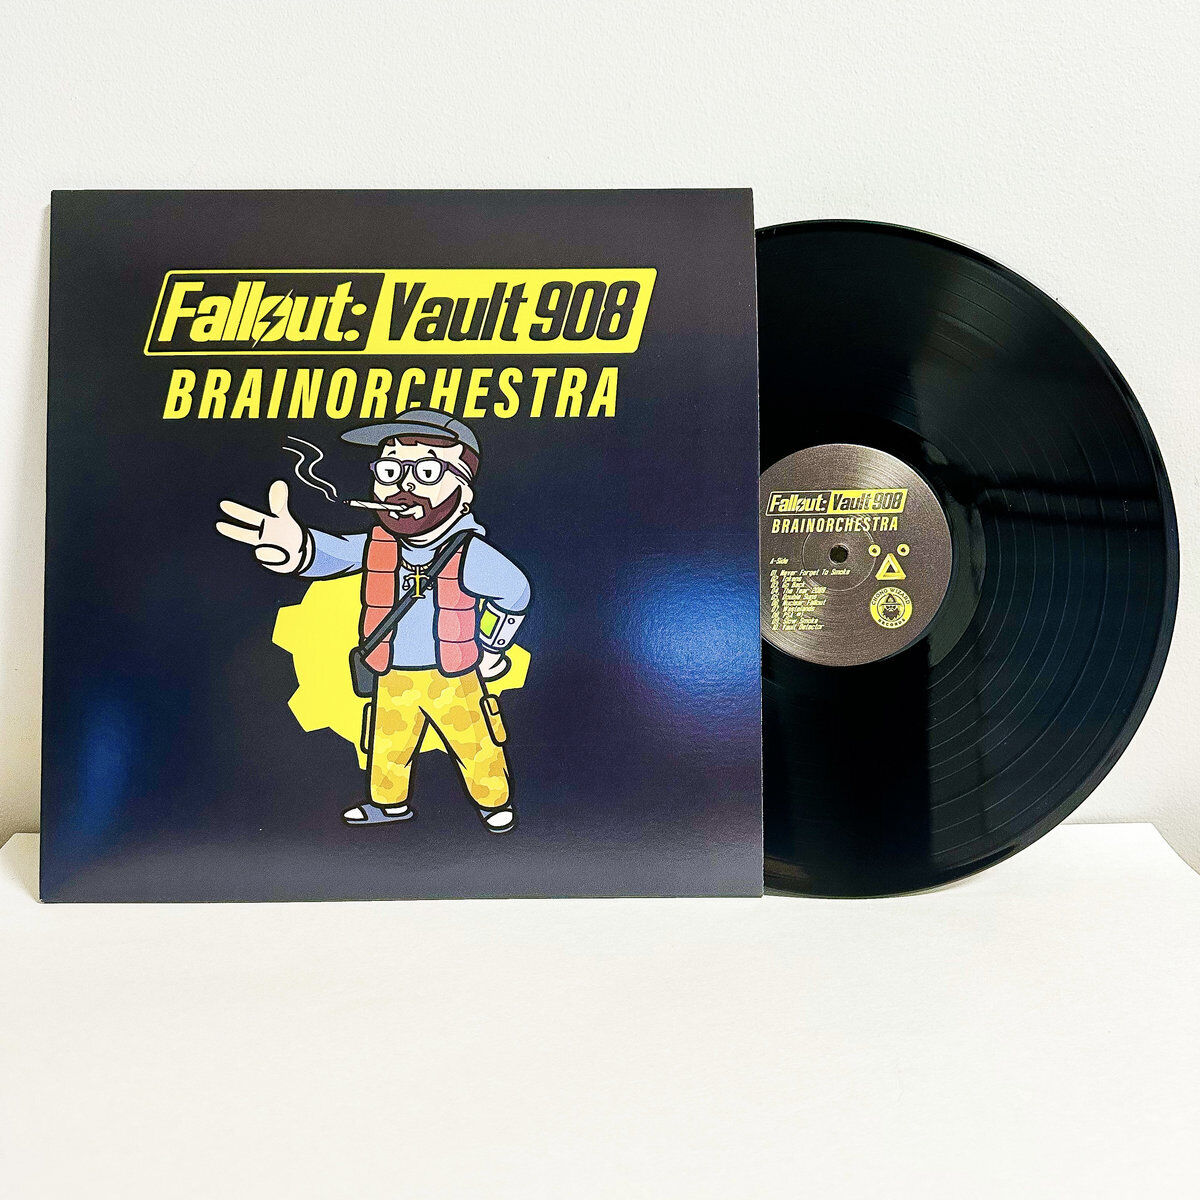 Brainorchestra - Fallout: Vault 908 / Vinyl LP